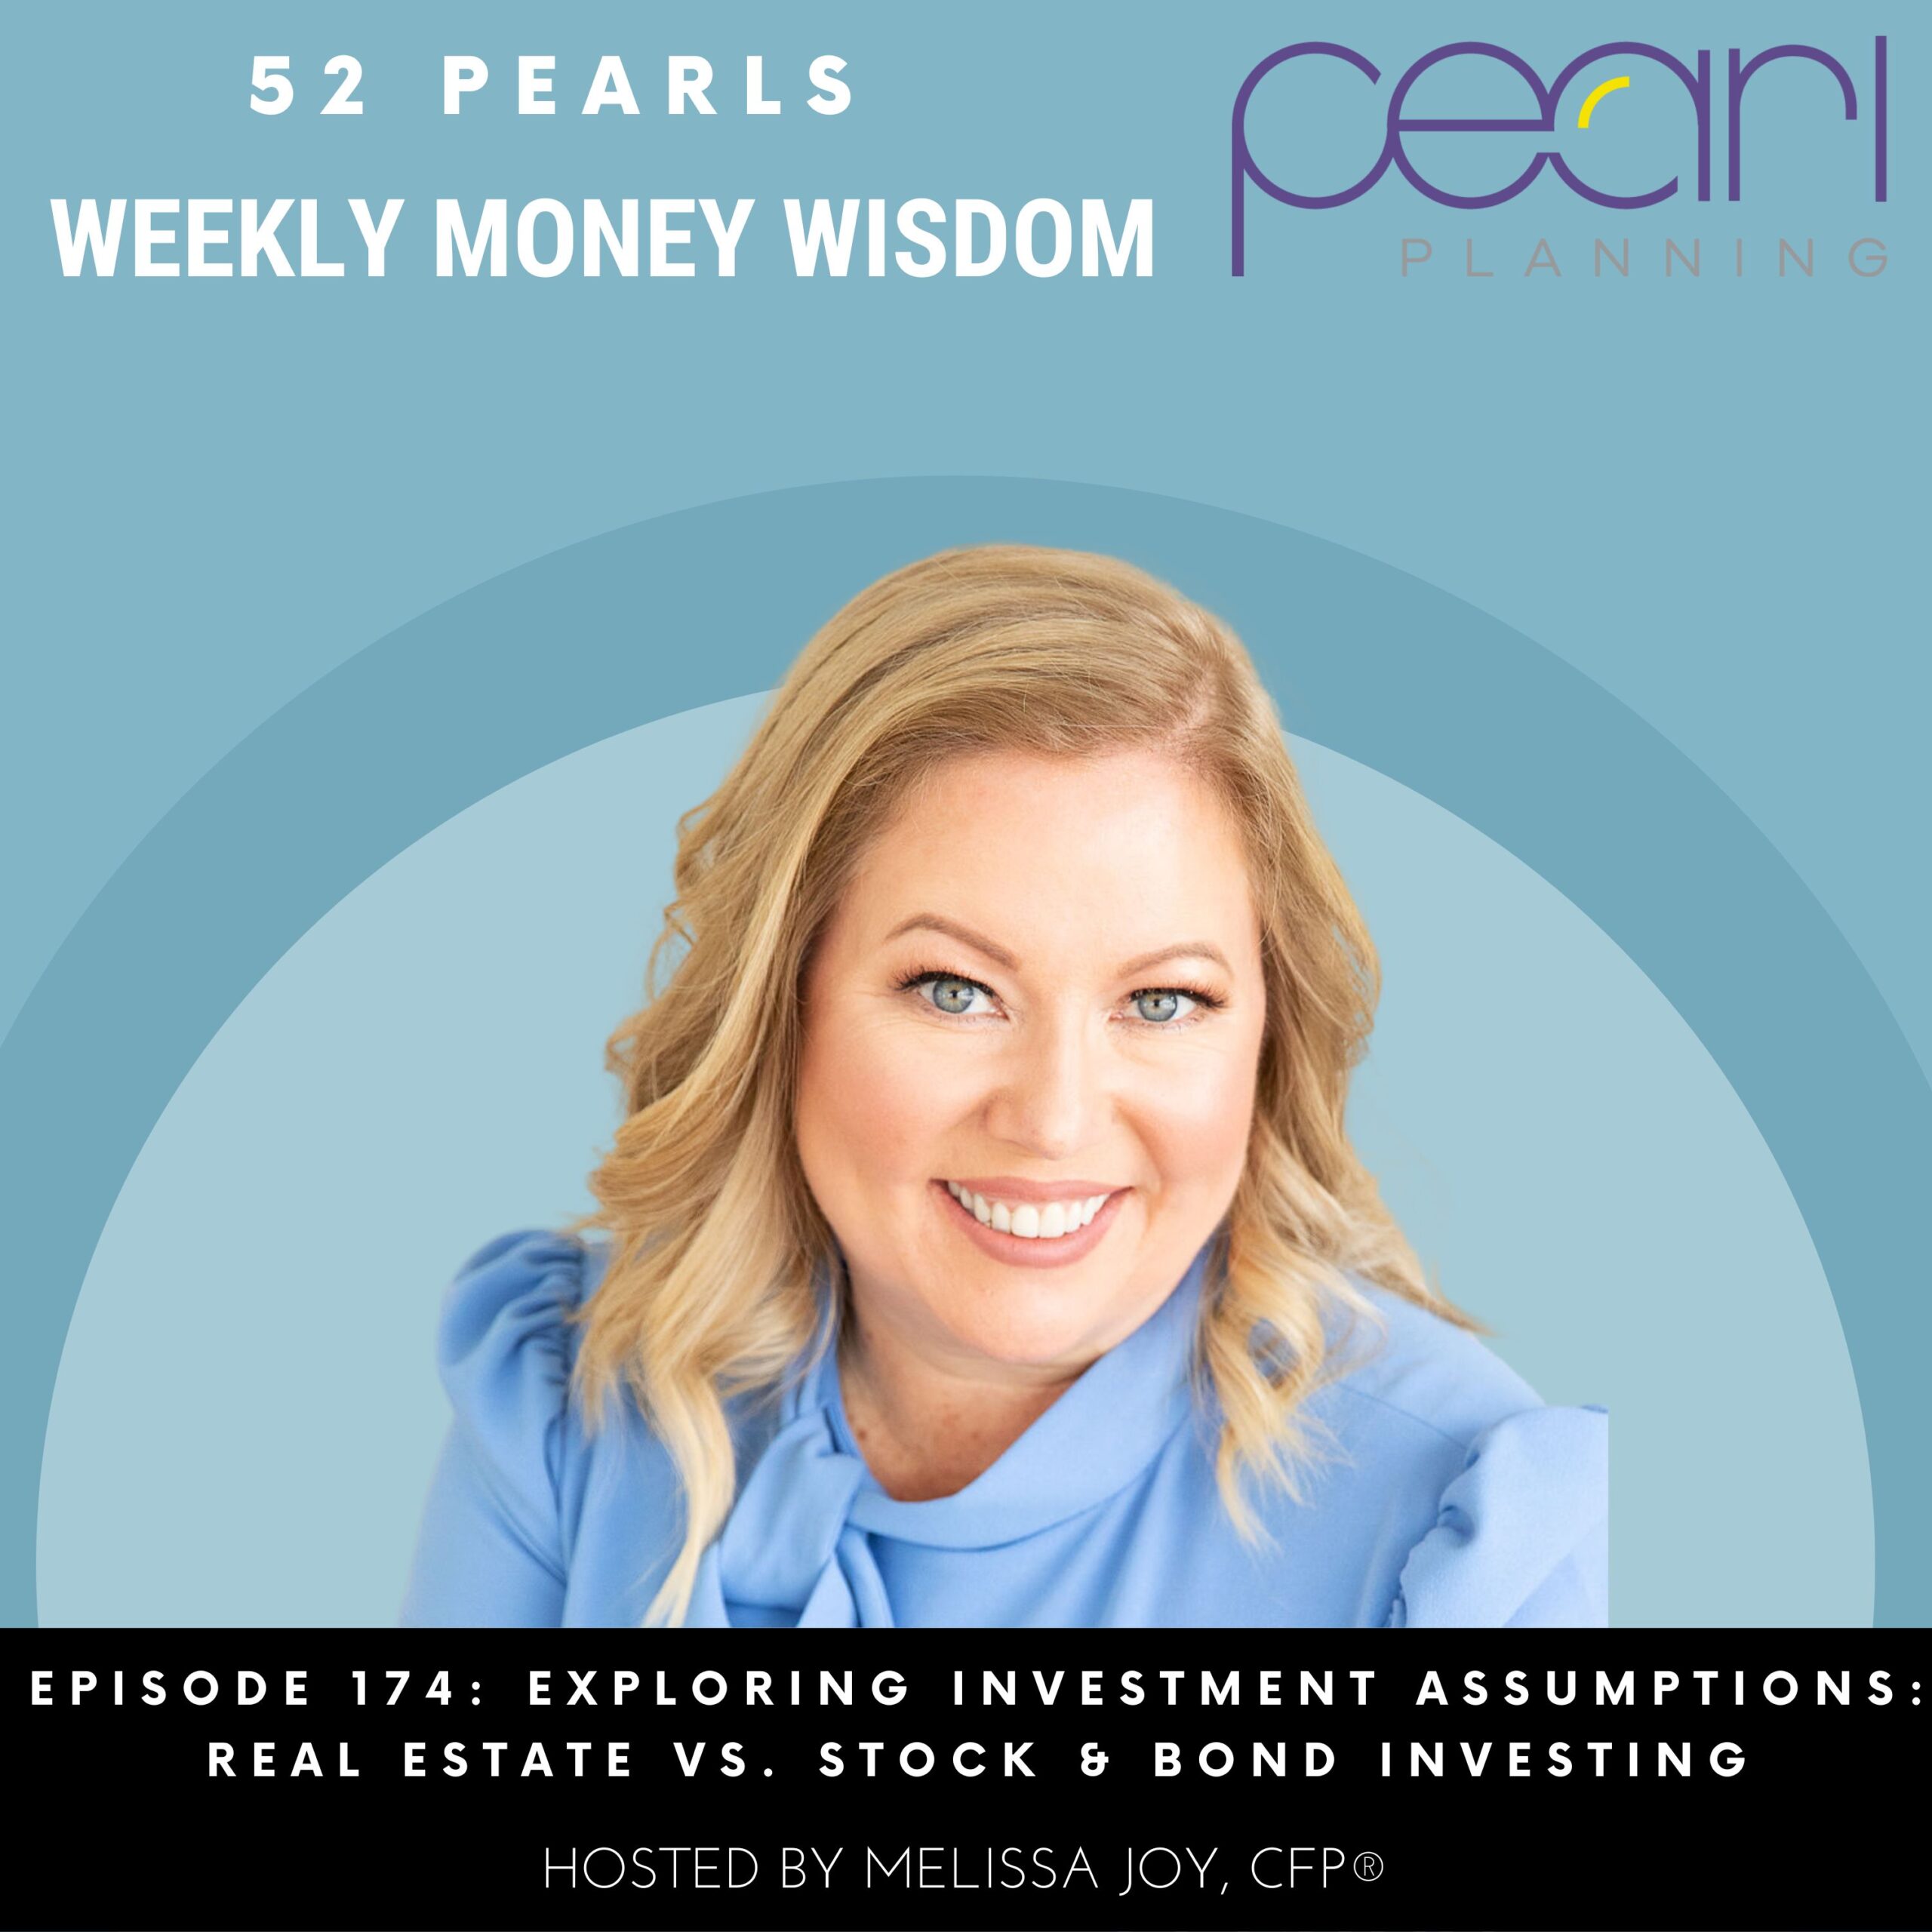 Investment Assumptions: Real Estate vs. Stock & Bond Investing